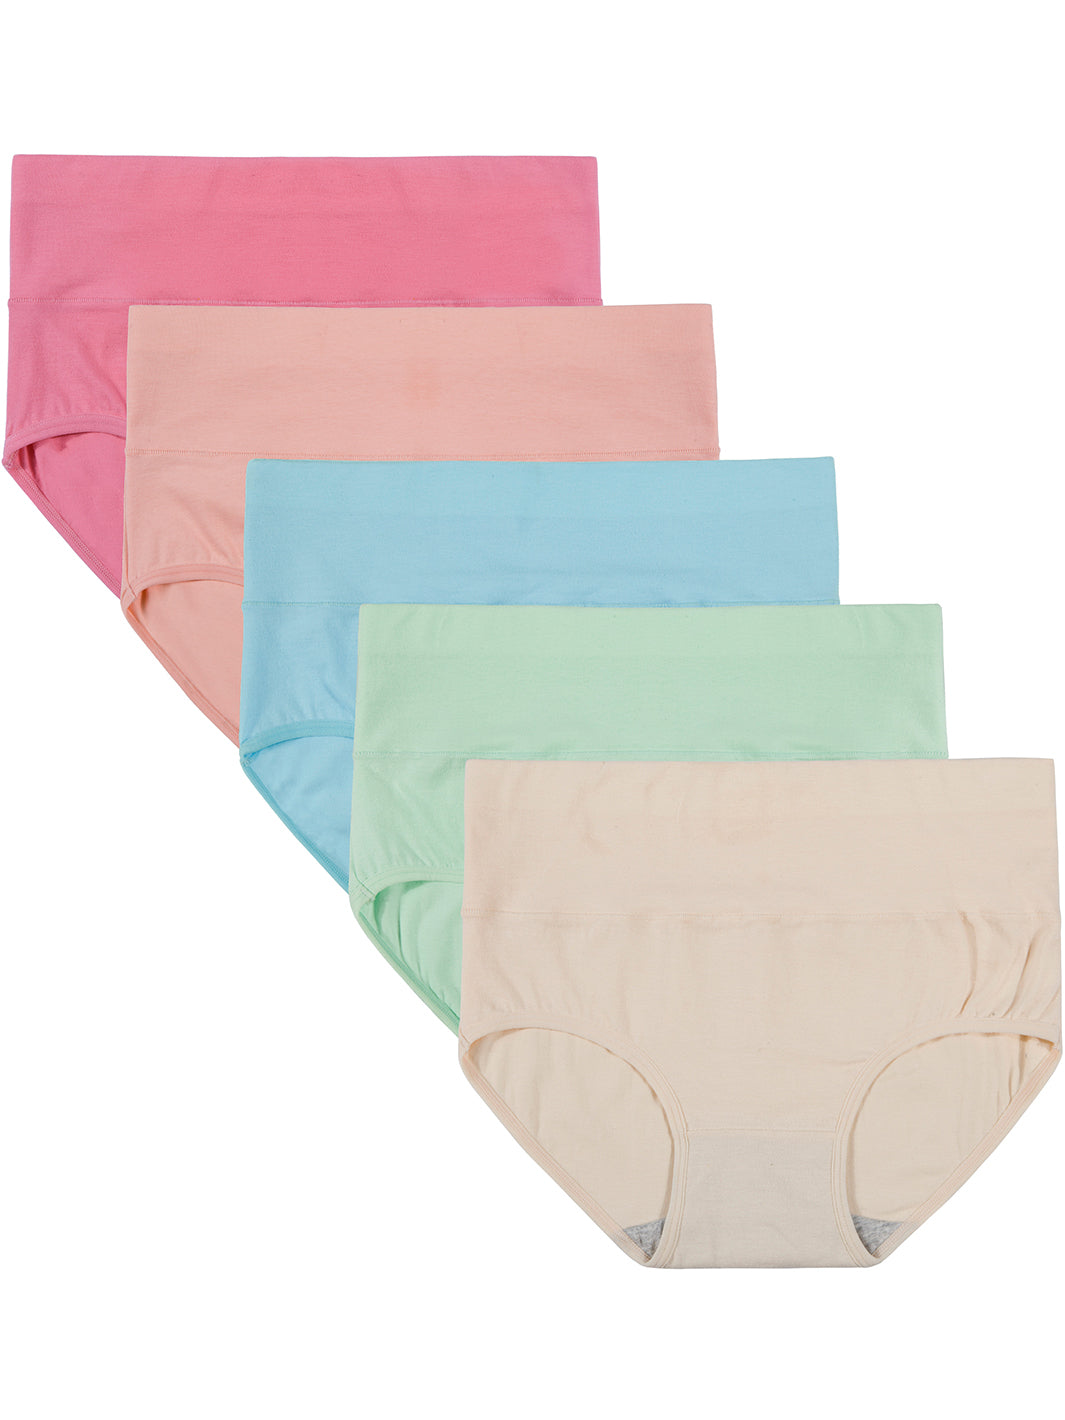 Buy Nightaste Women's G-String Panties Pack of 5 Cotton Thongs